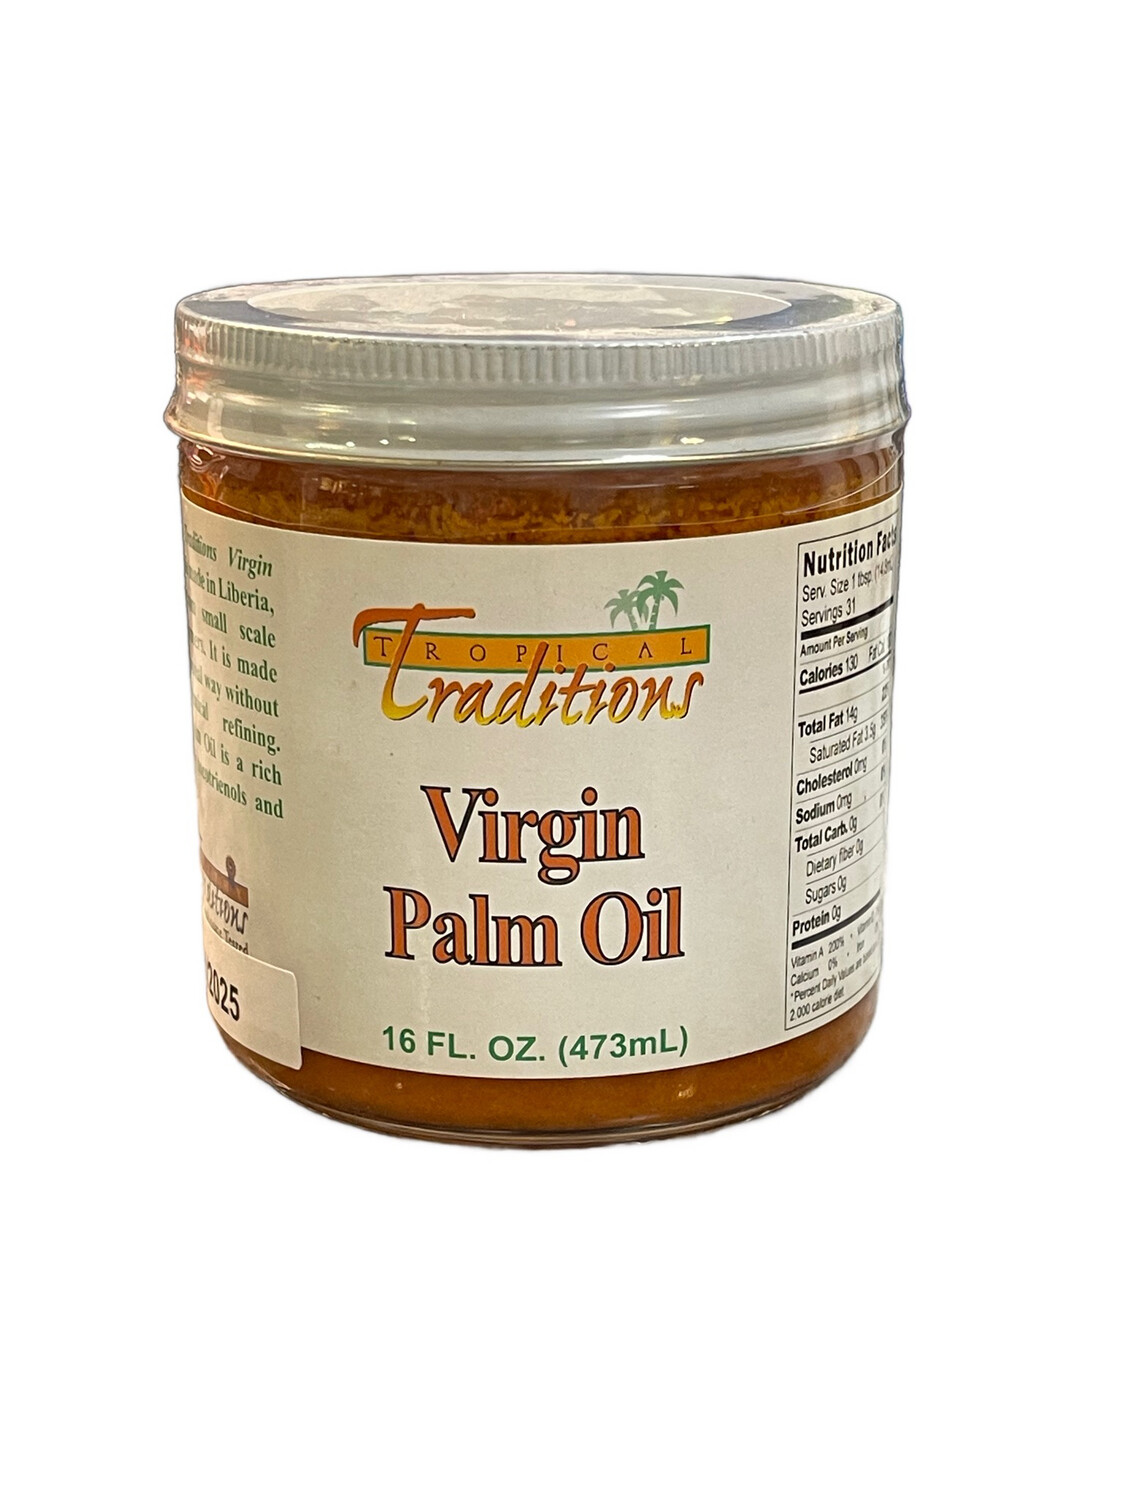 NEW! Tropical Traditions Virgin Palm Oil 16 oz. - 1 Pint (16 oz glass jar)